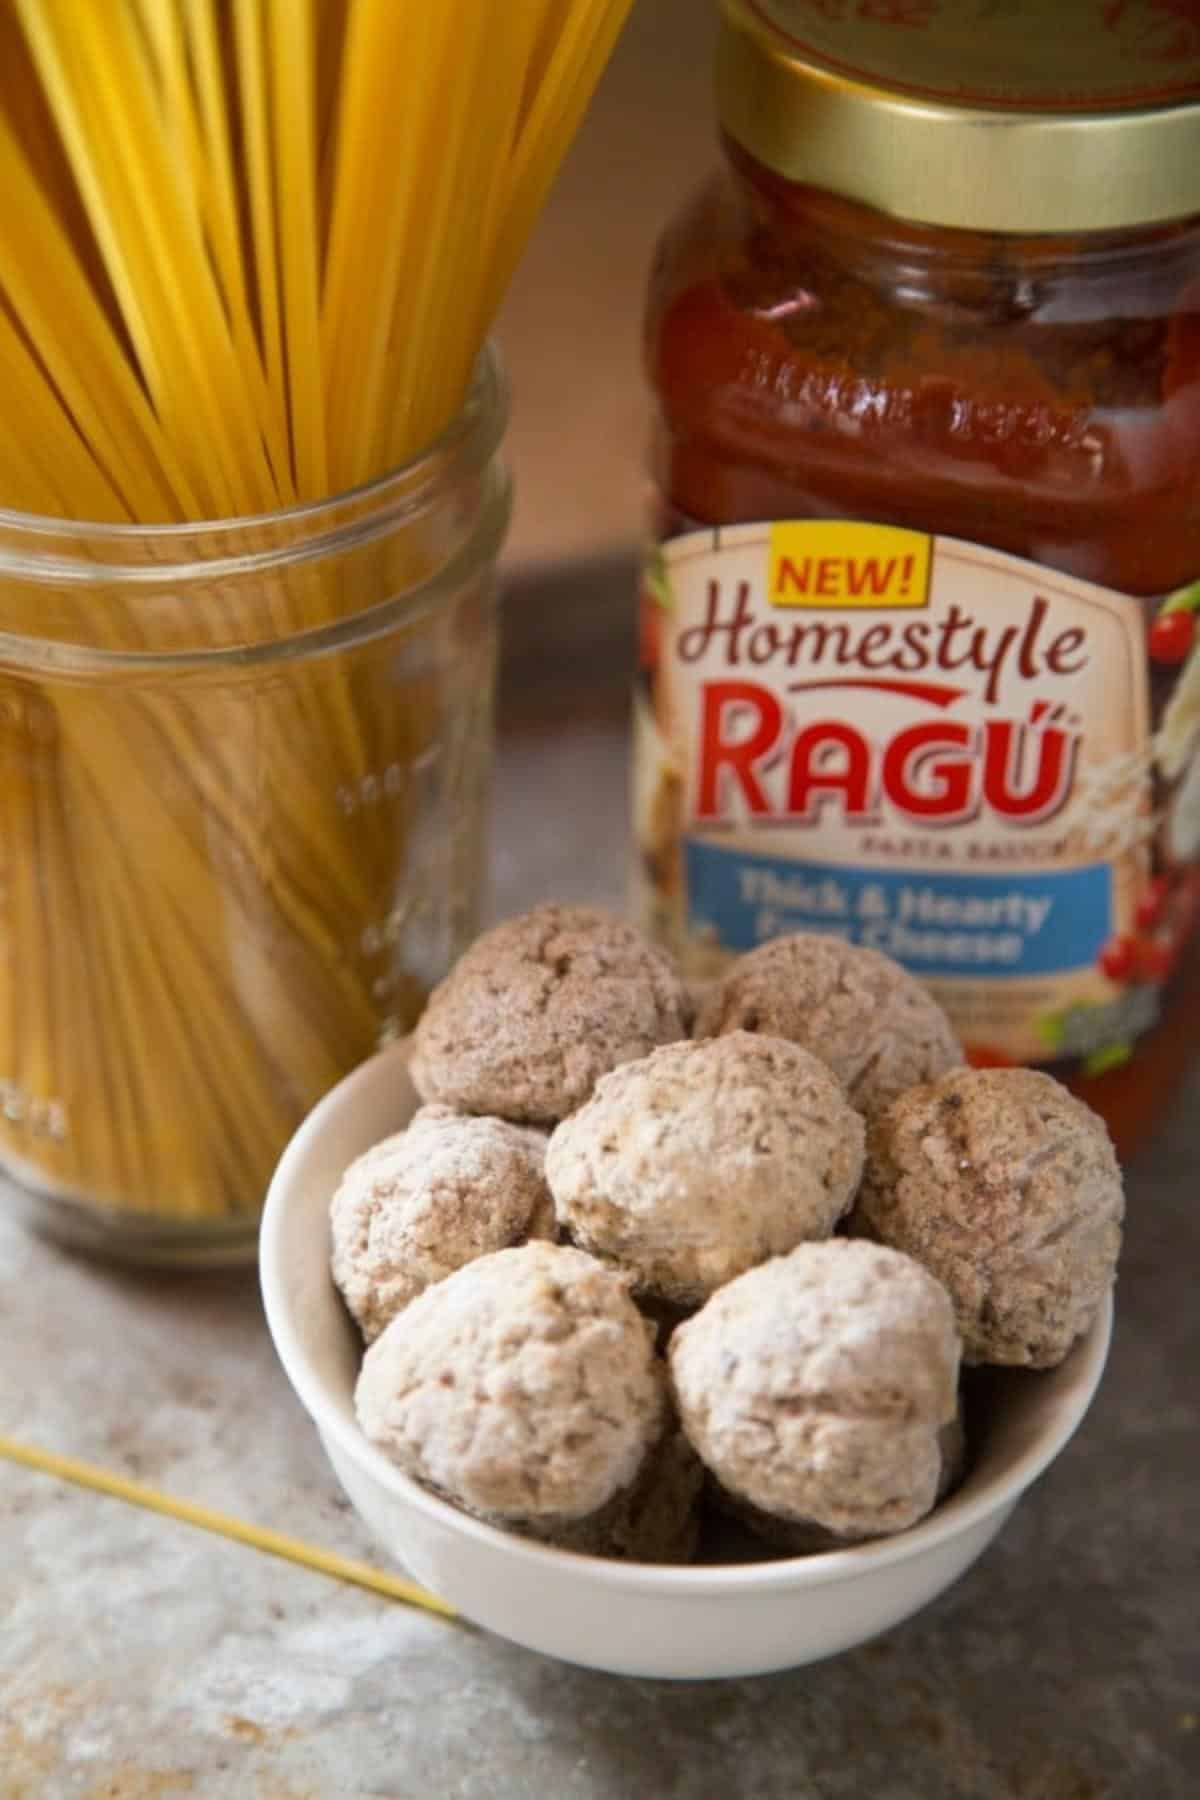 A jar full of spaghetti noodles, a white bowl of frozen meatballs, a jar of ragu pasta sauce.